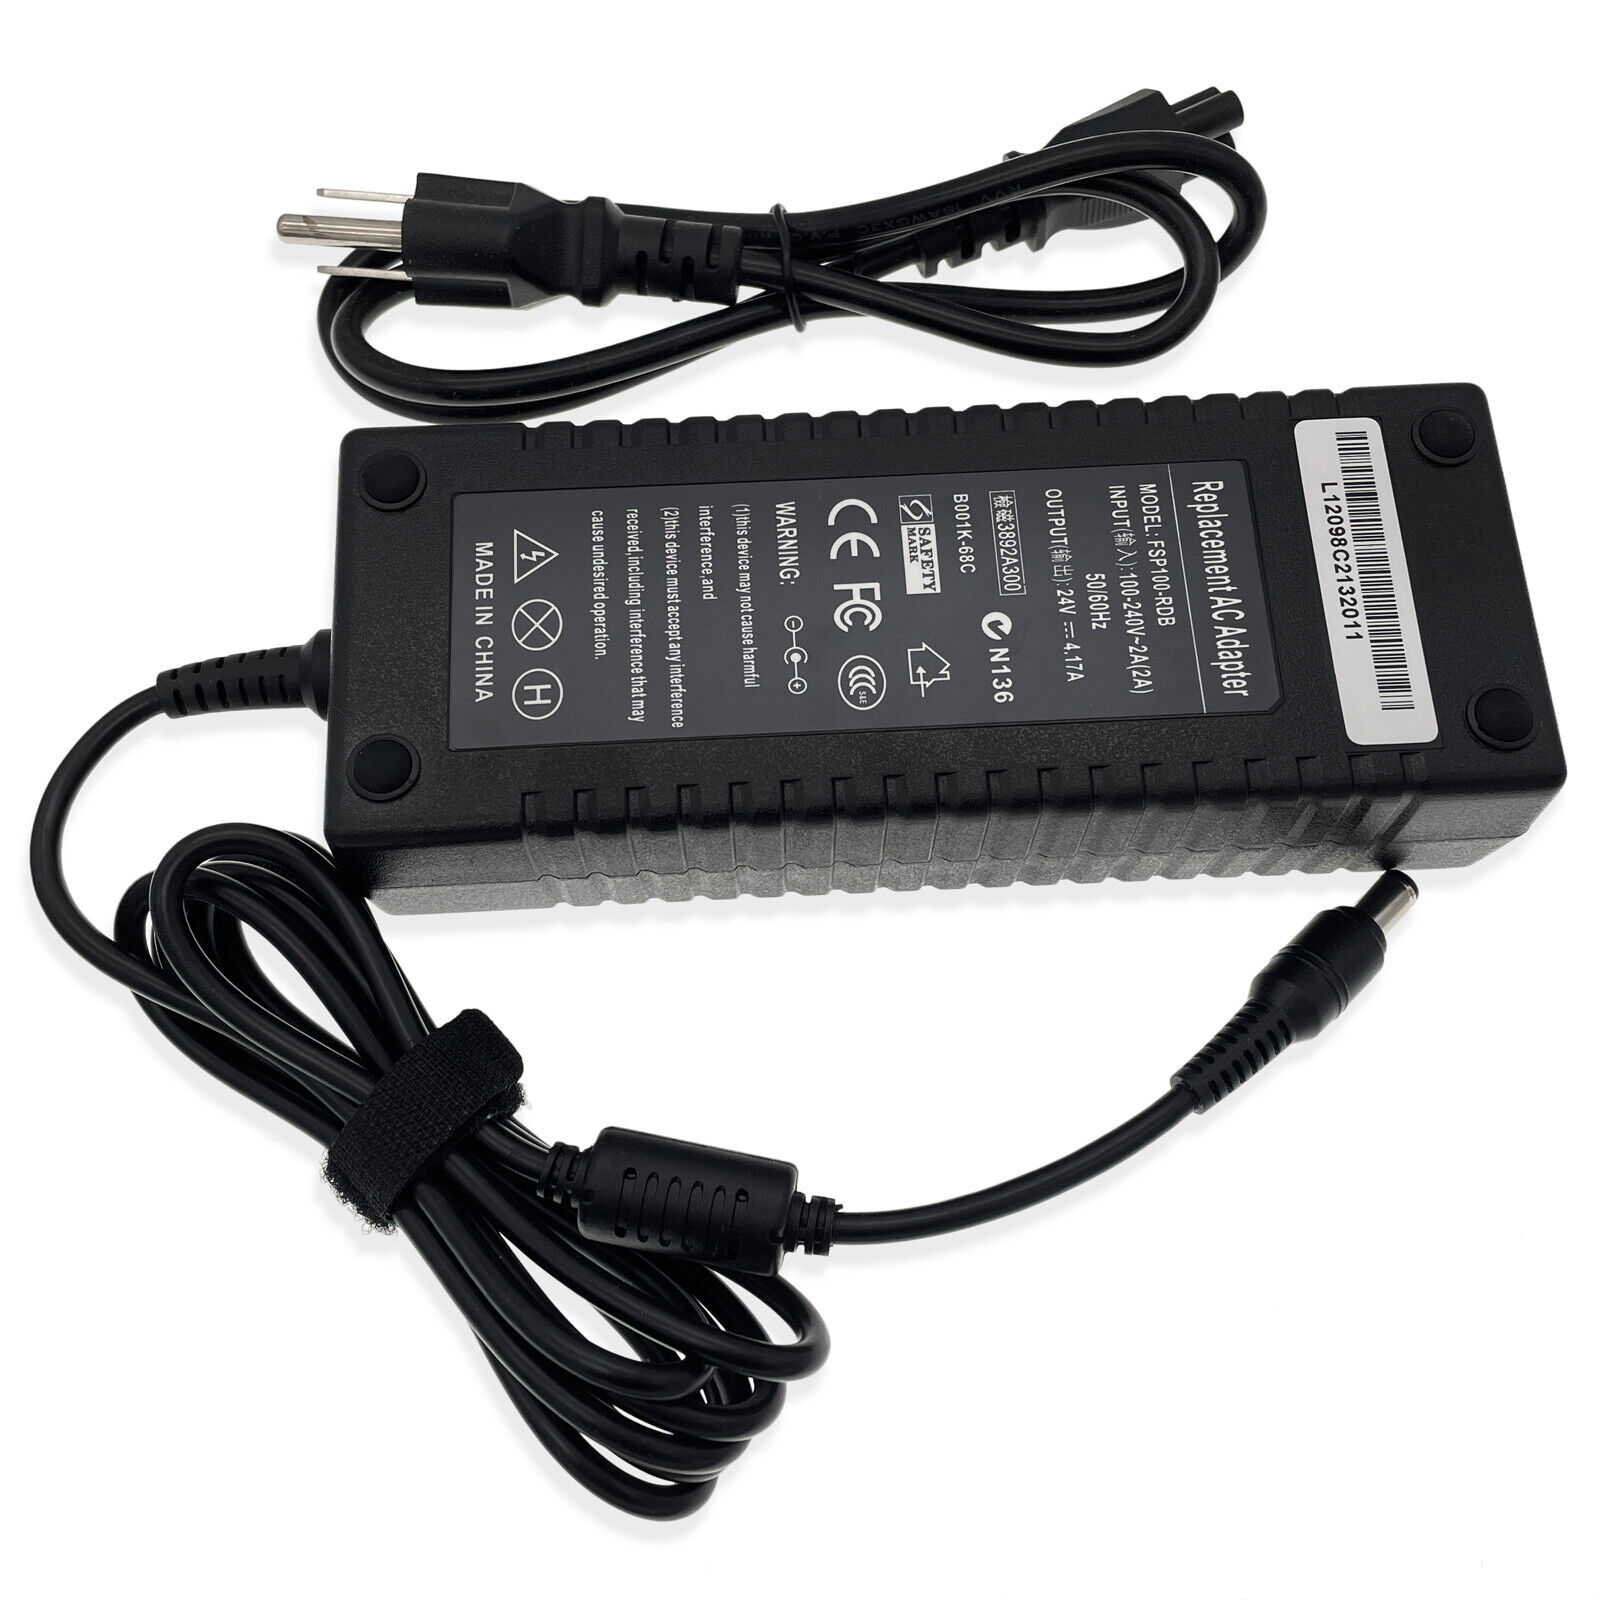 24V AC/DC Adapter for Zebra GK420d ZP550 ZP450 ZD500 ZD410 Power Supply Cord